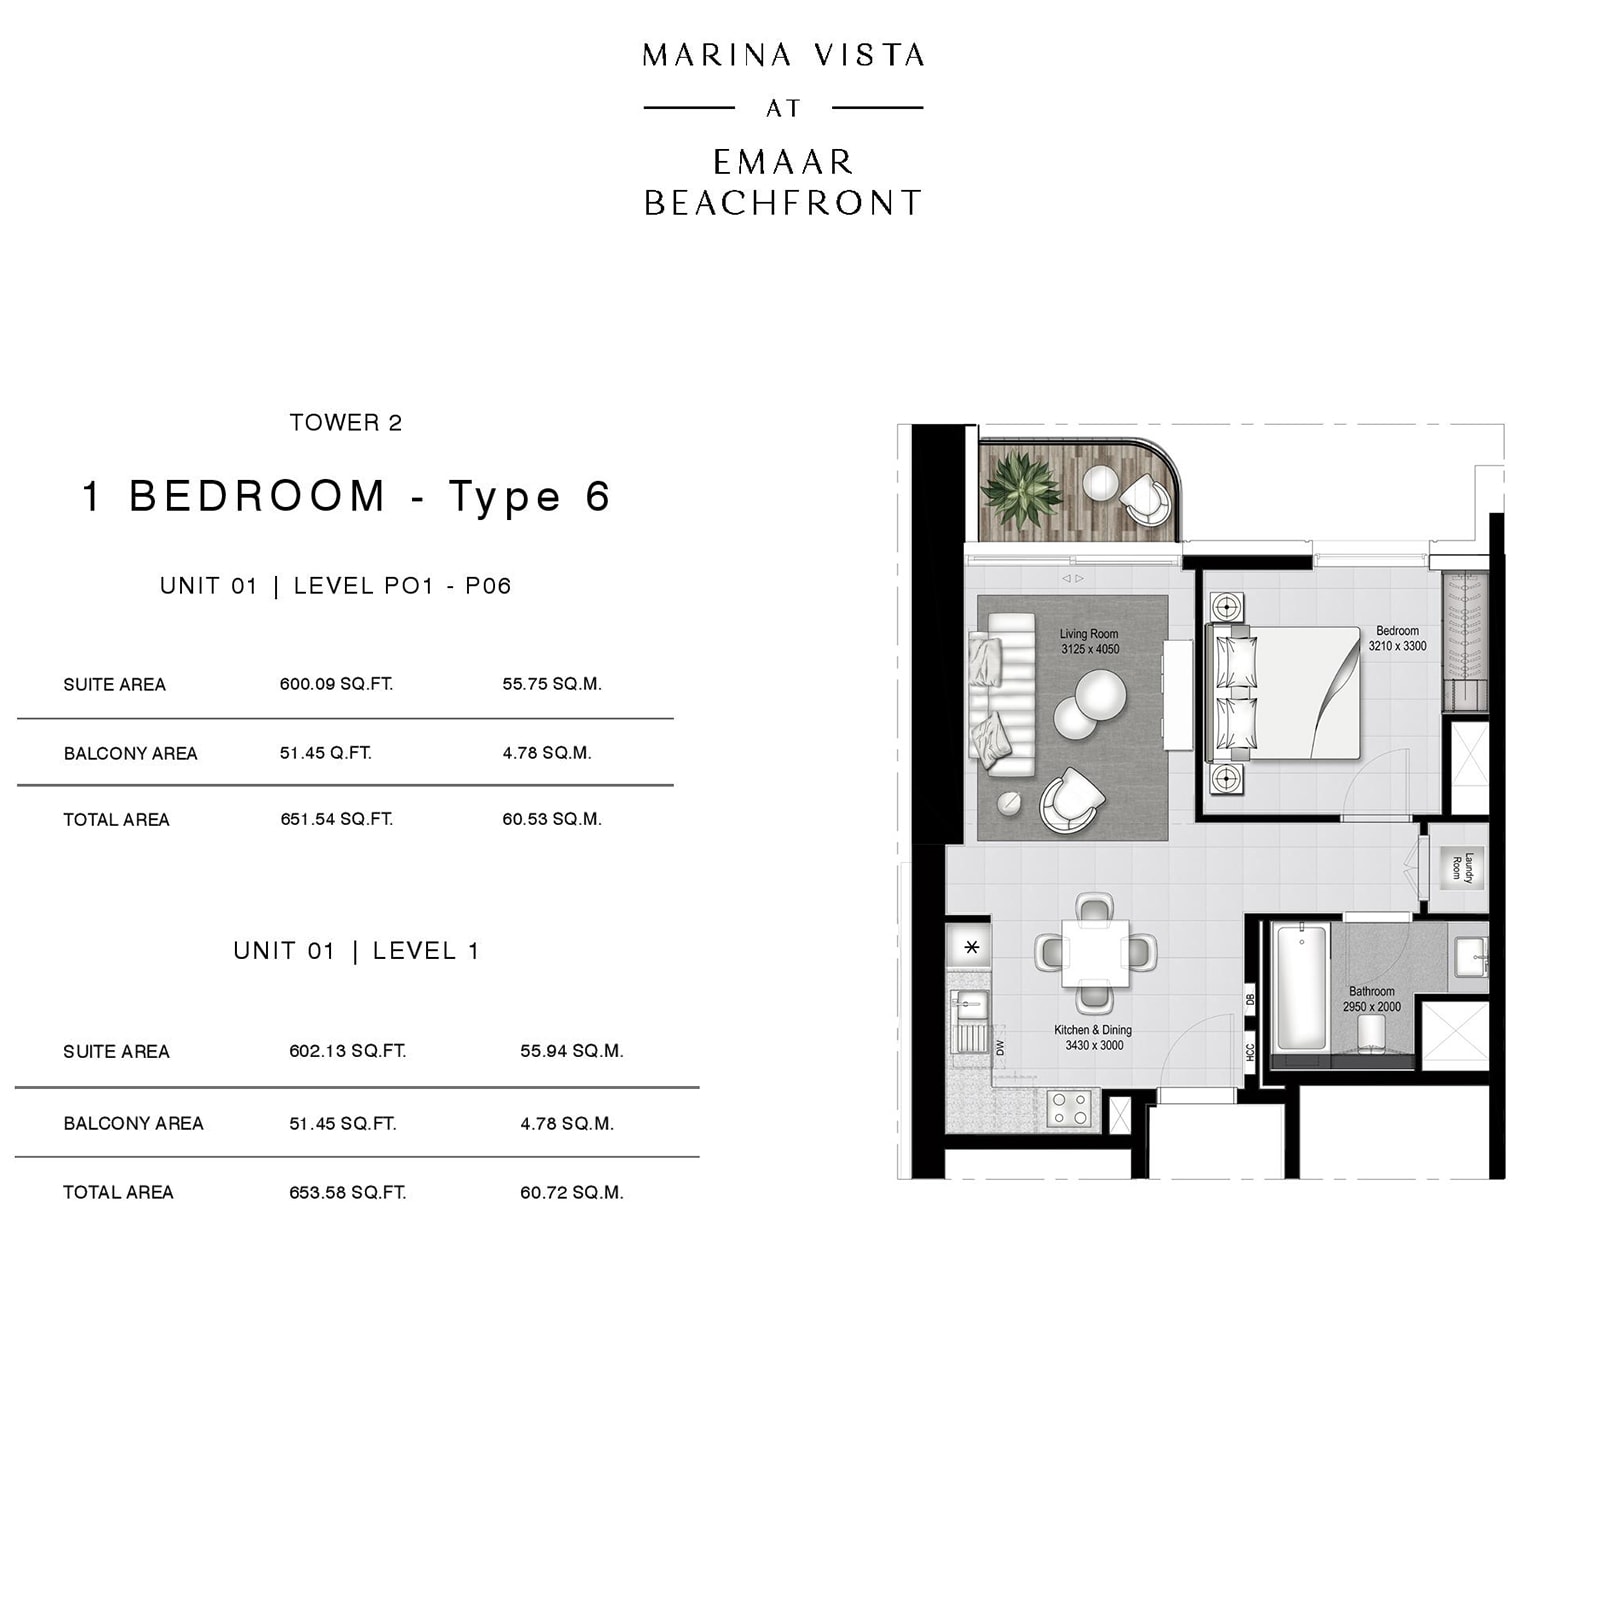 emaar Marina Vista apartments price dubai